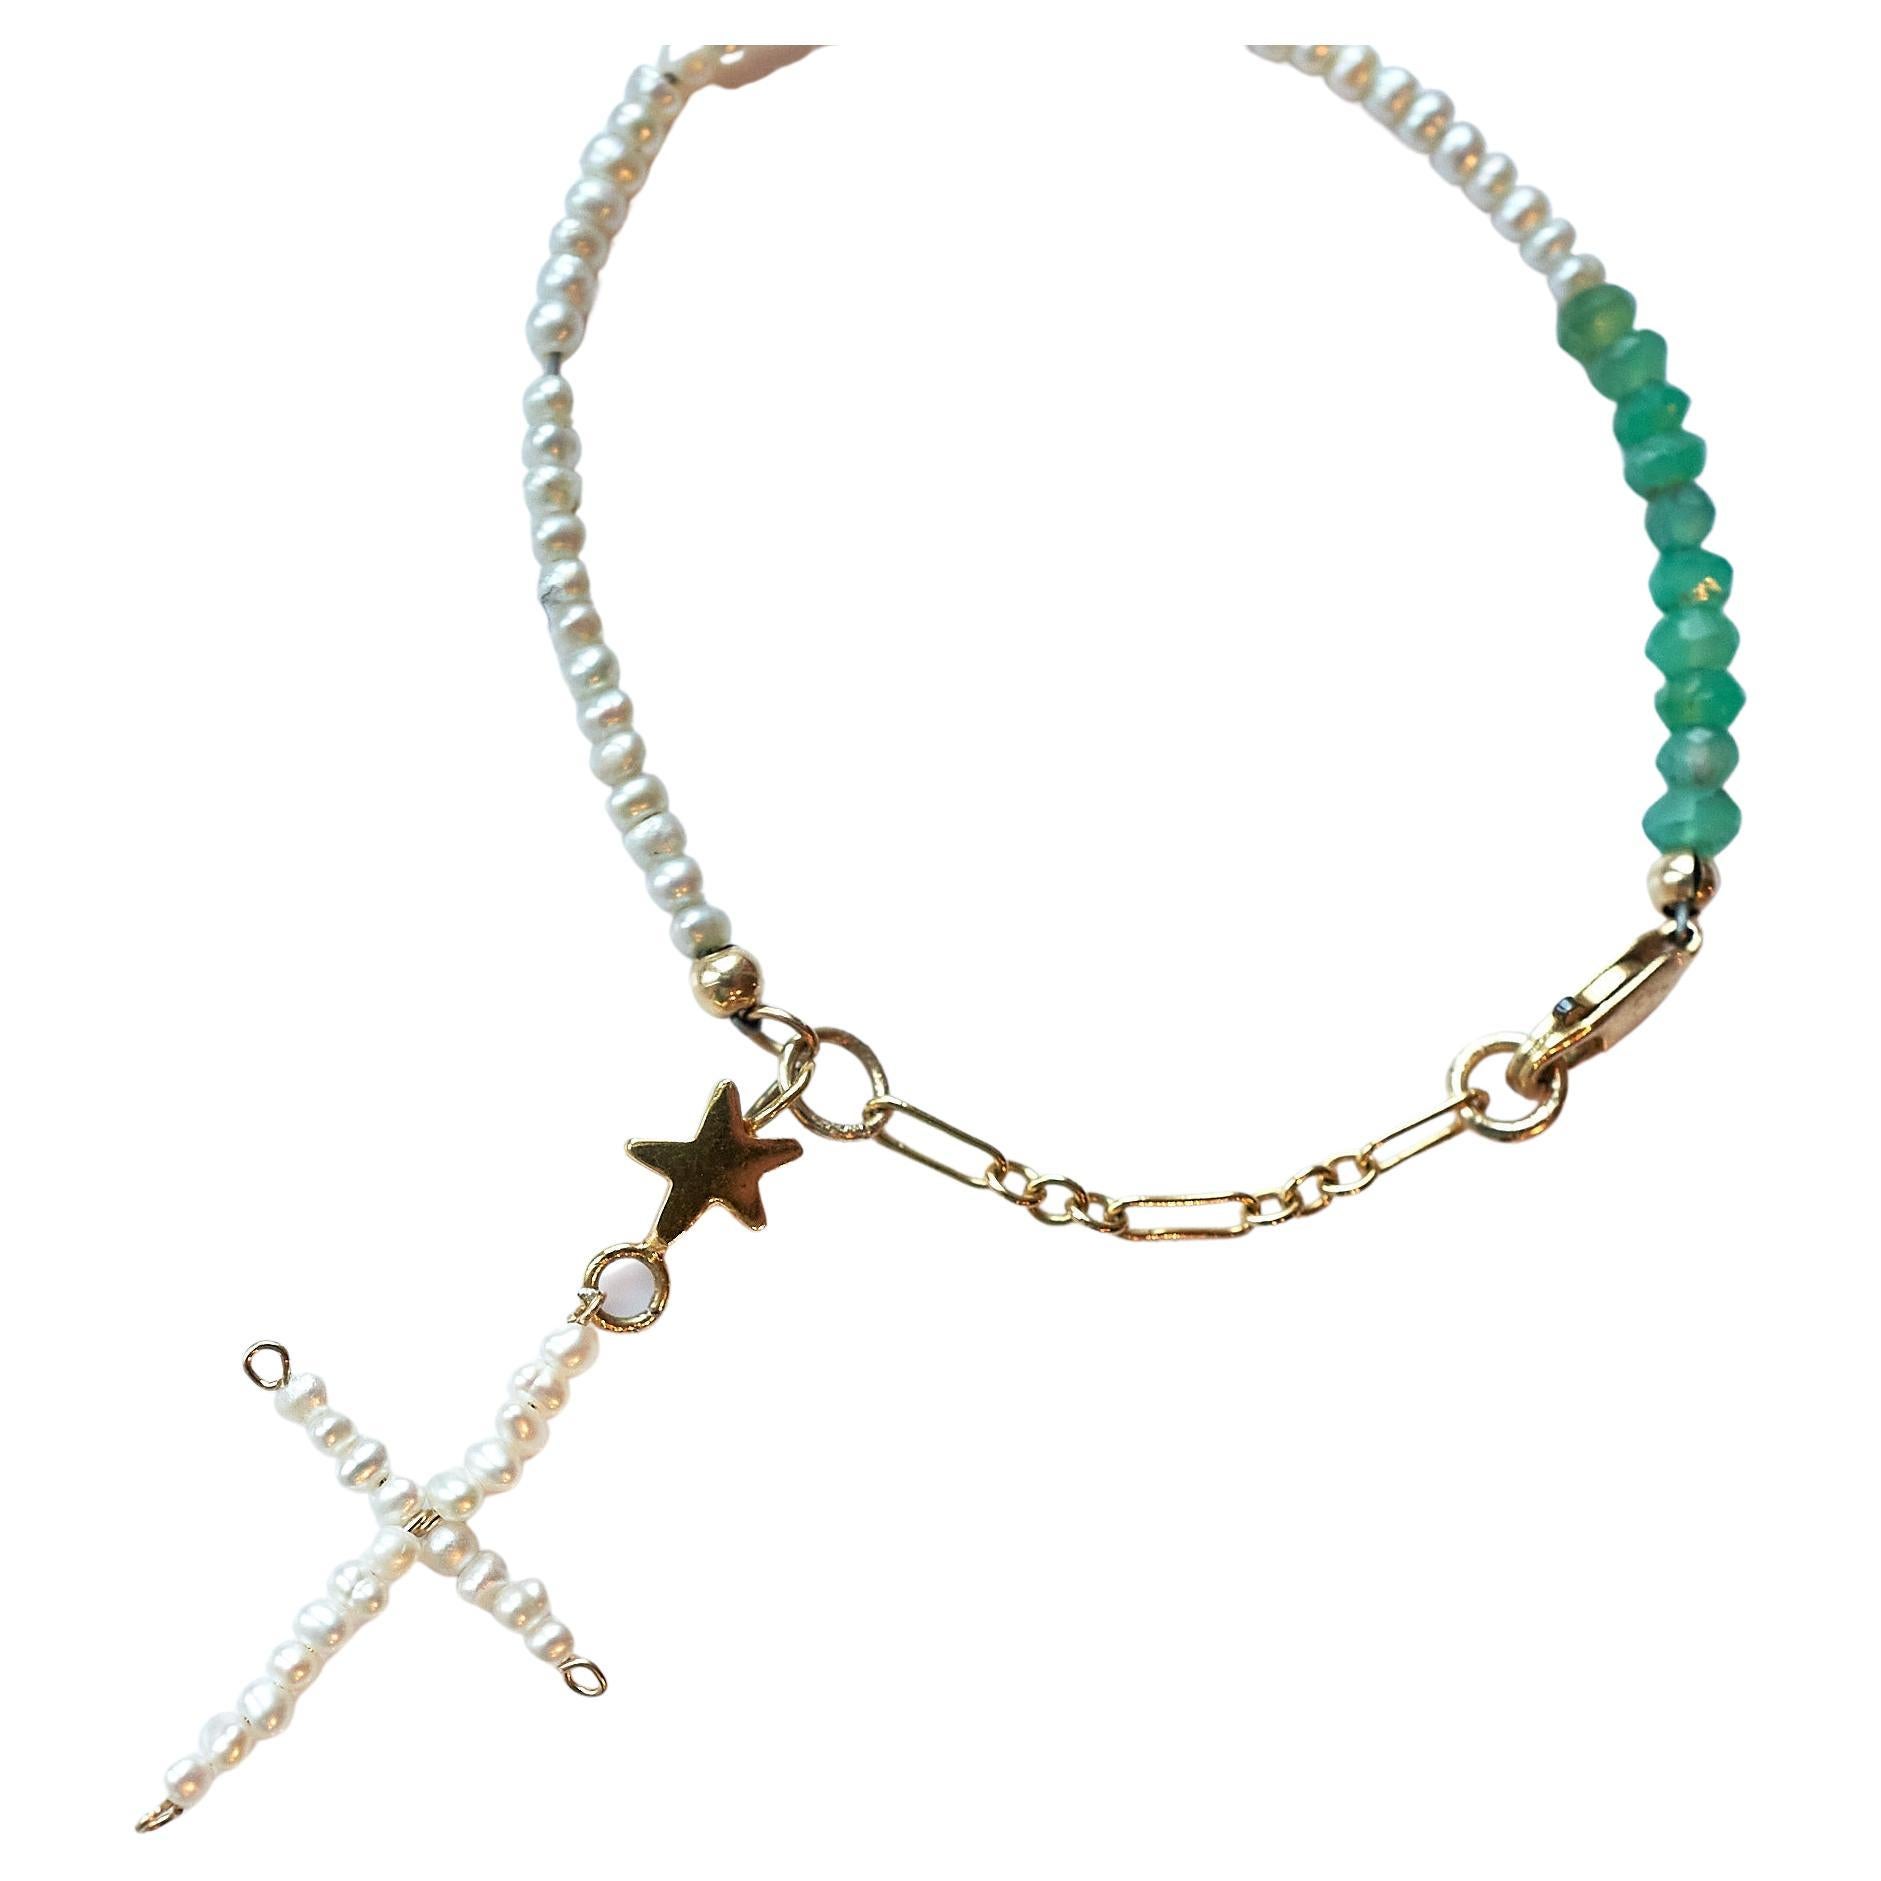 Perle  Kreuz Weiß Perle Kette Armband Grün Chrysopras  
Designer J DAUPHIN

